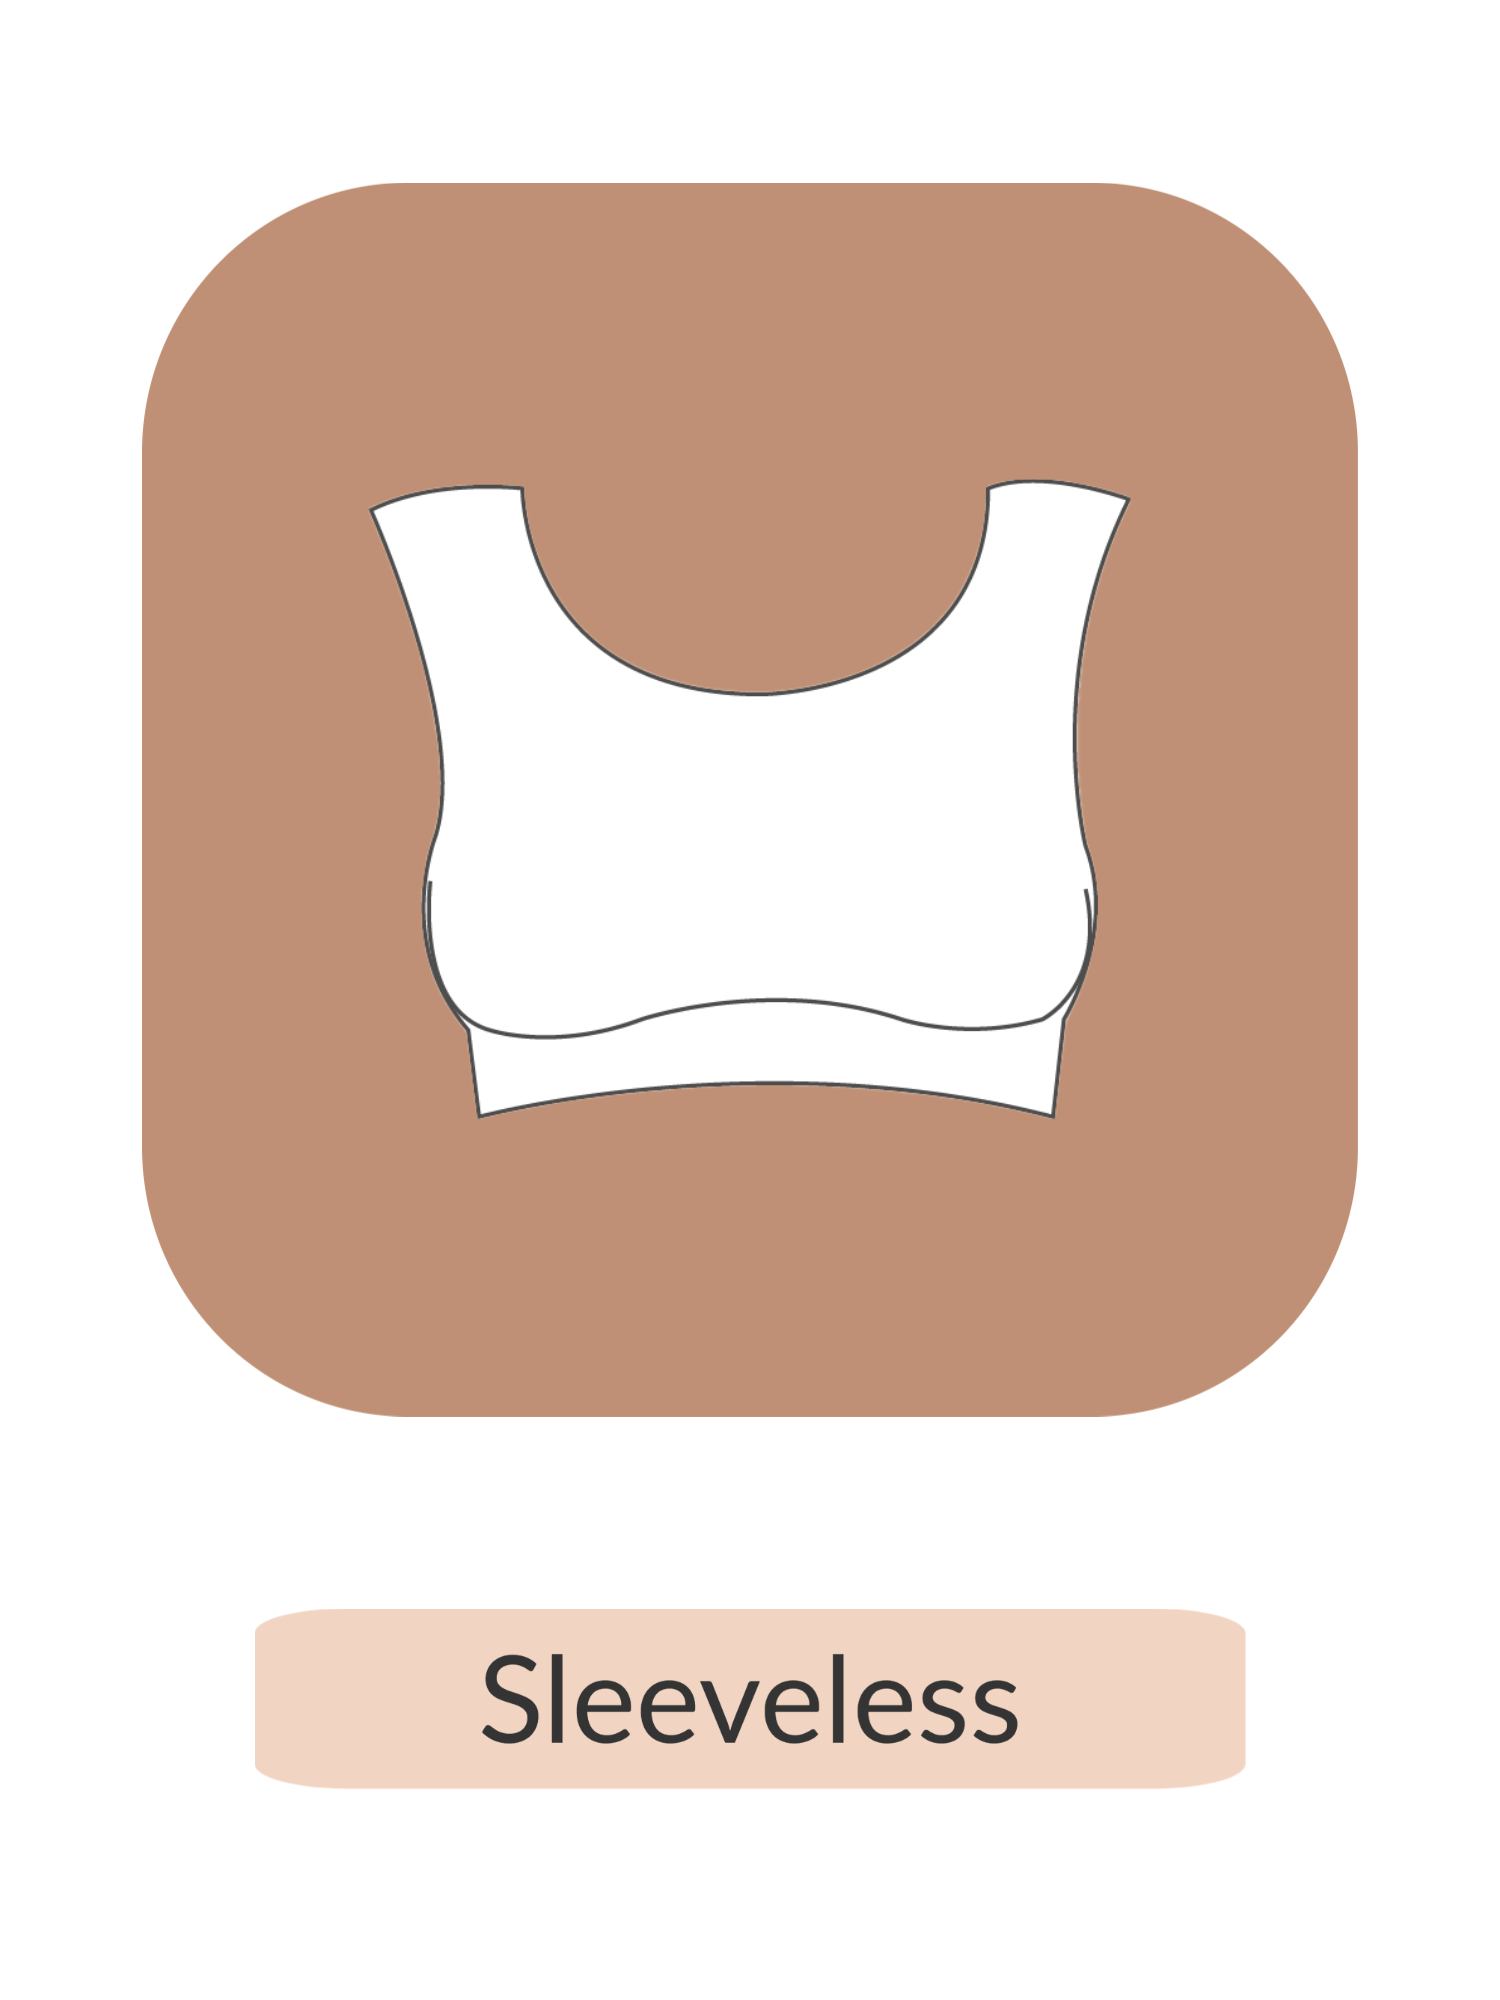 White sleeveless bra top with text 'sleeveless' on it.